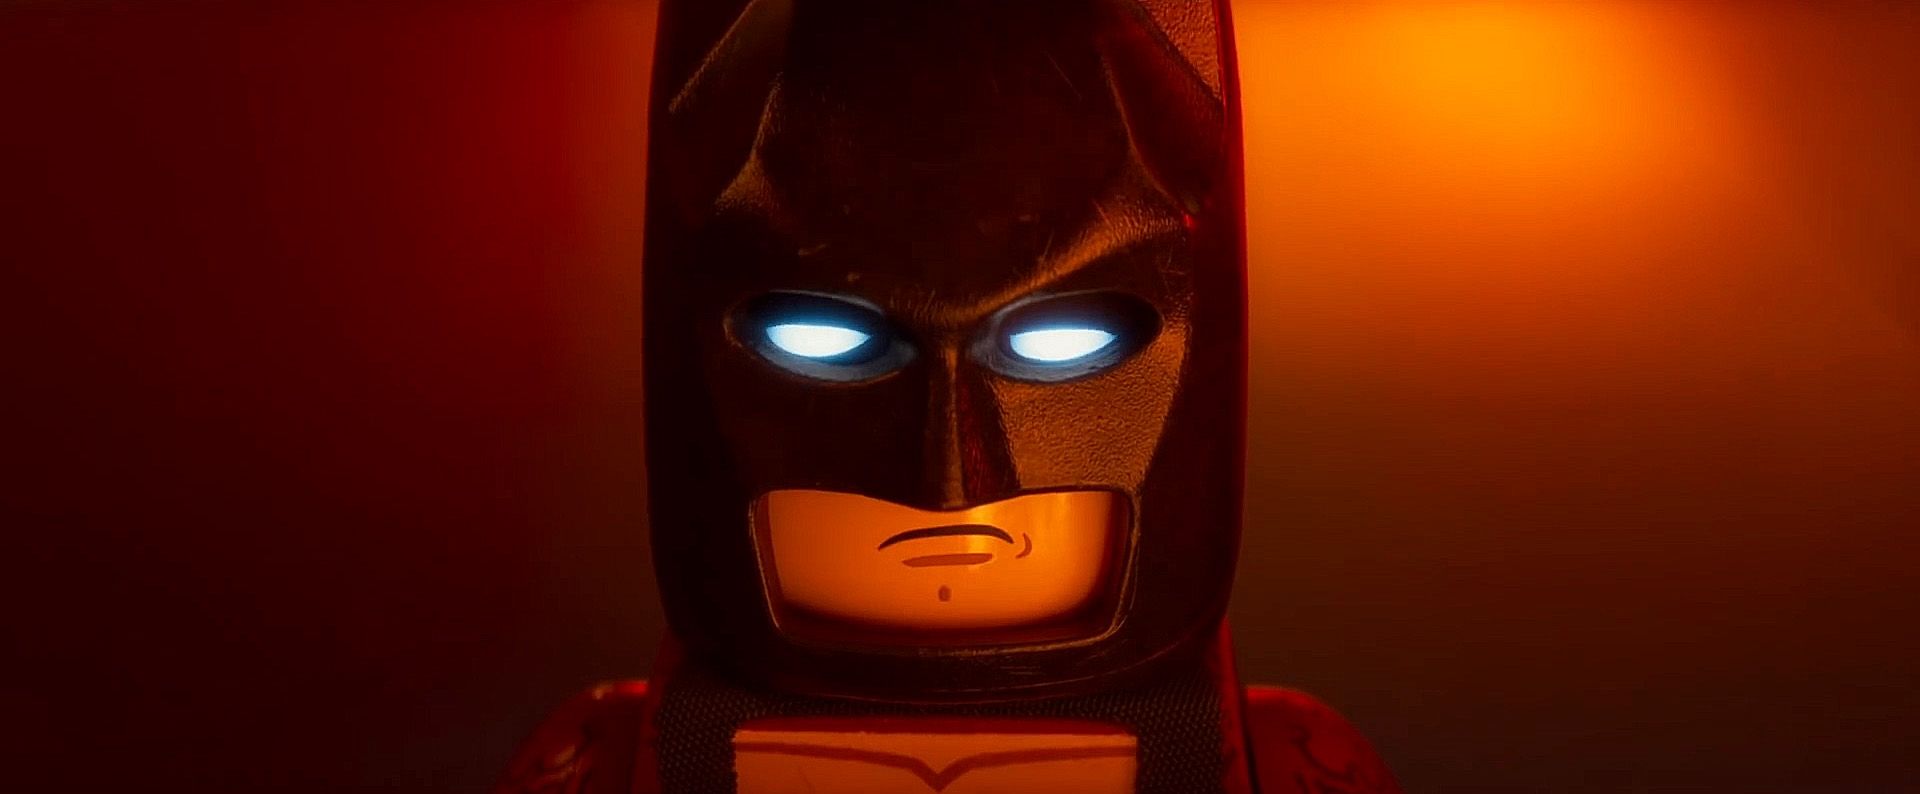 LEGO-Batman-pensive